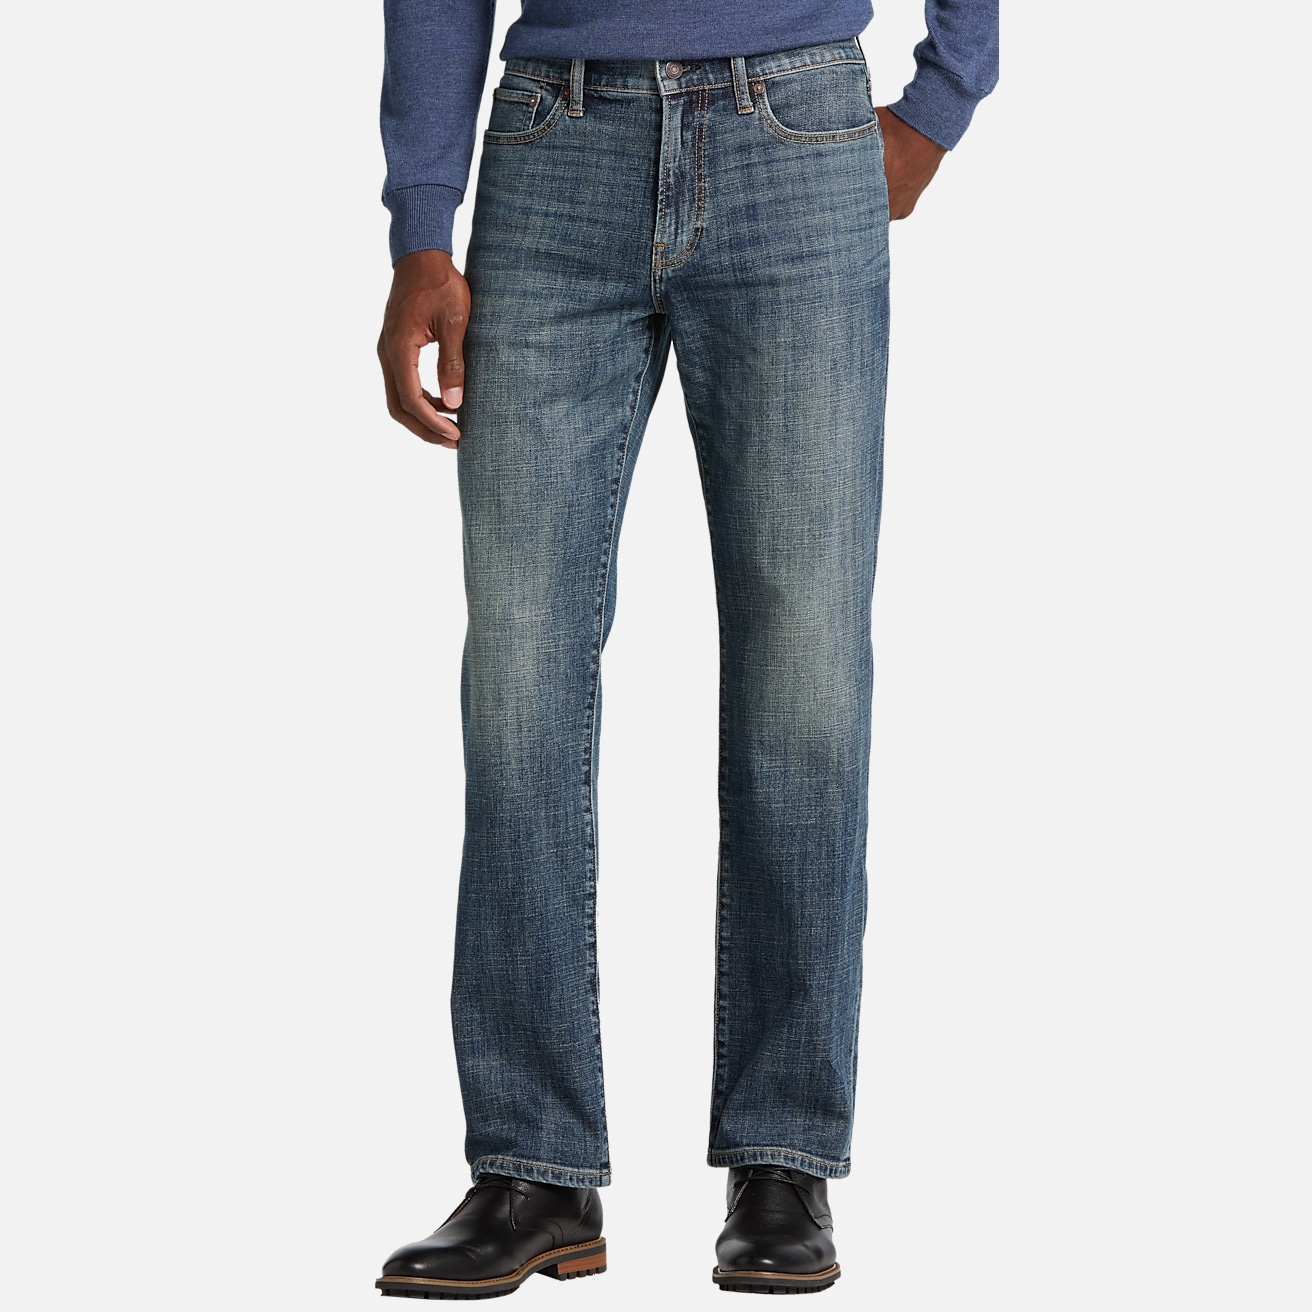 Lucky Brand Jeans Men's Size 31 Straight 100% Cotton Denim